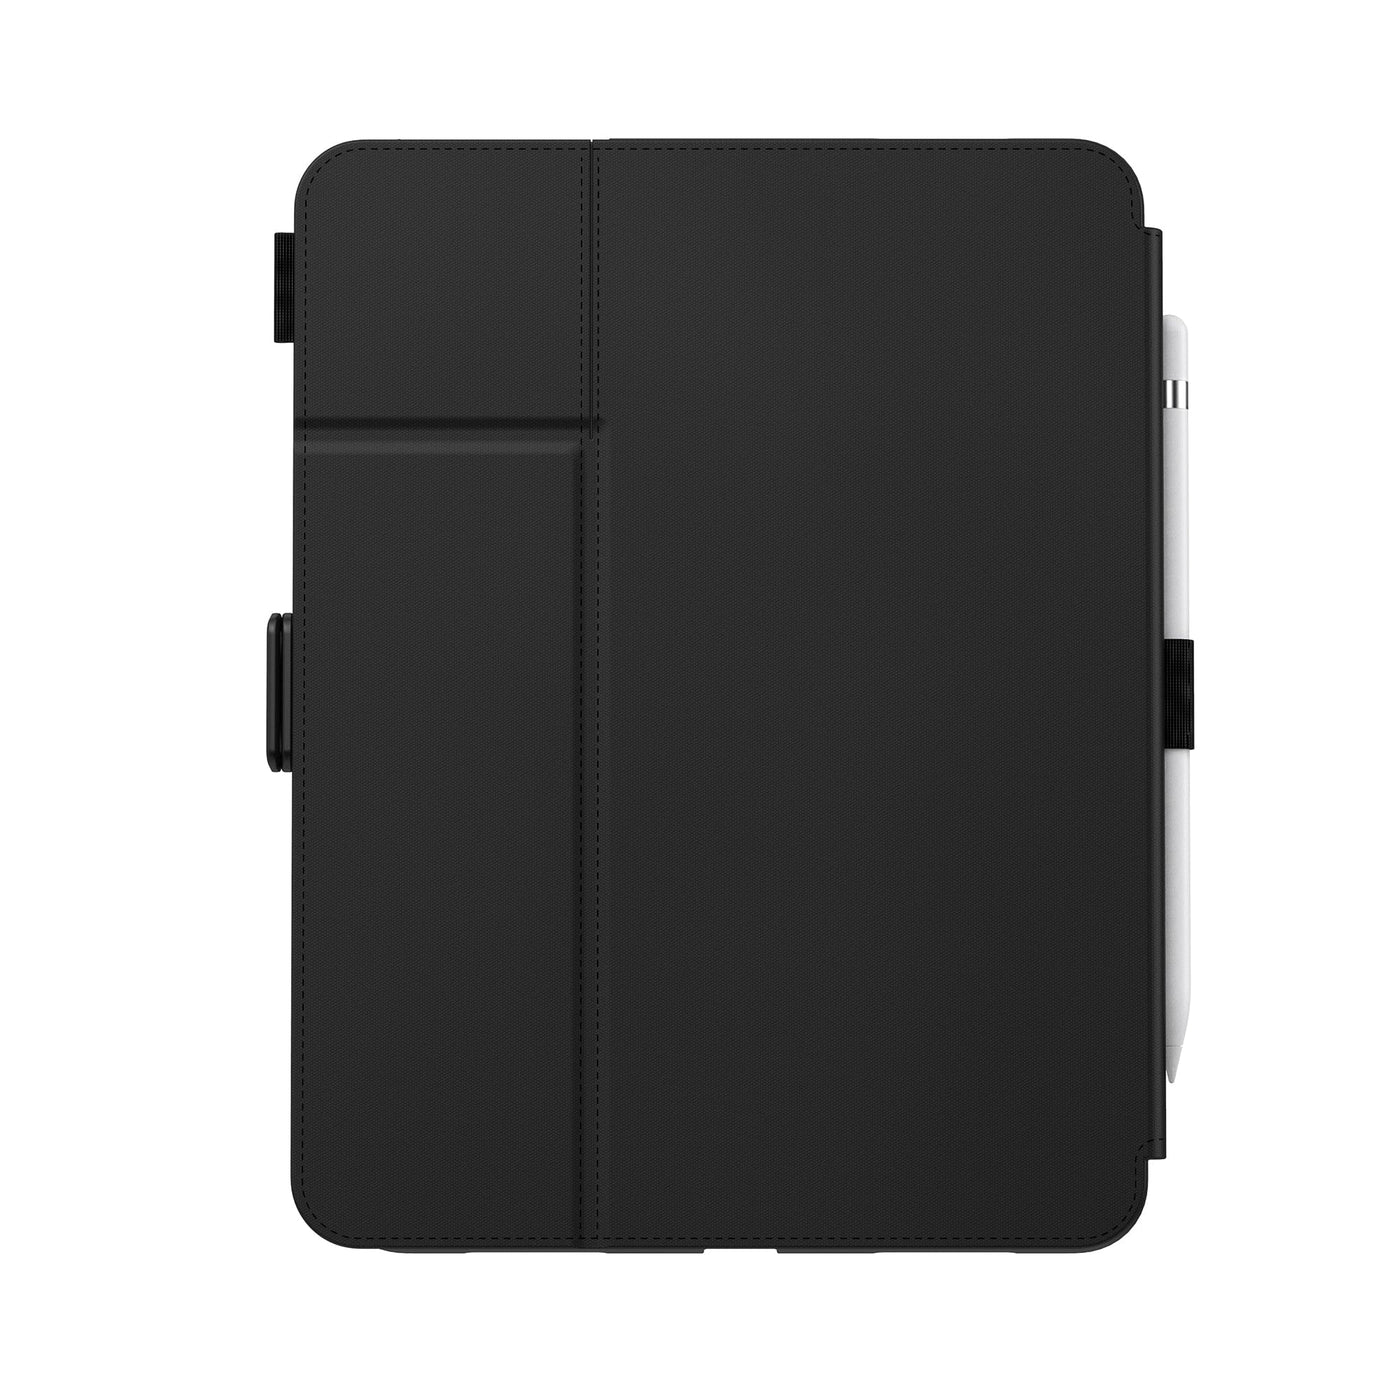 Speck Balance Folio 10.9-inch iPad Cases Best 10.9-inch iPad - $44.99